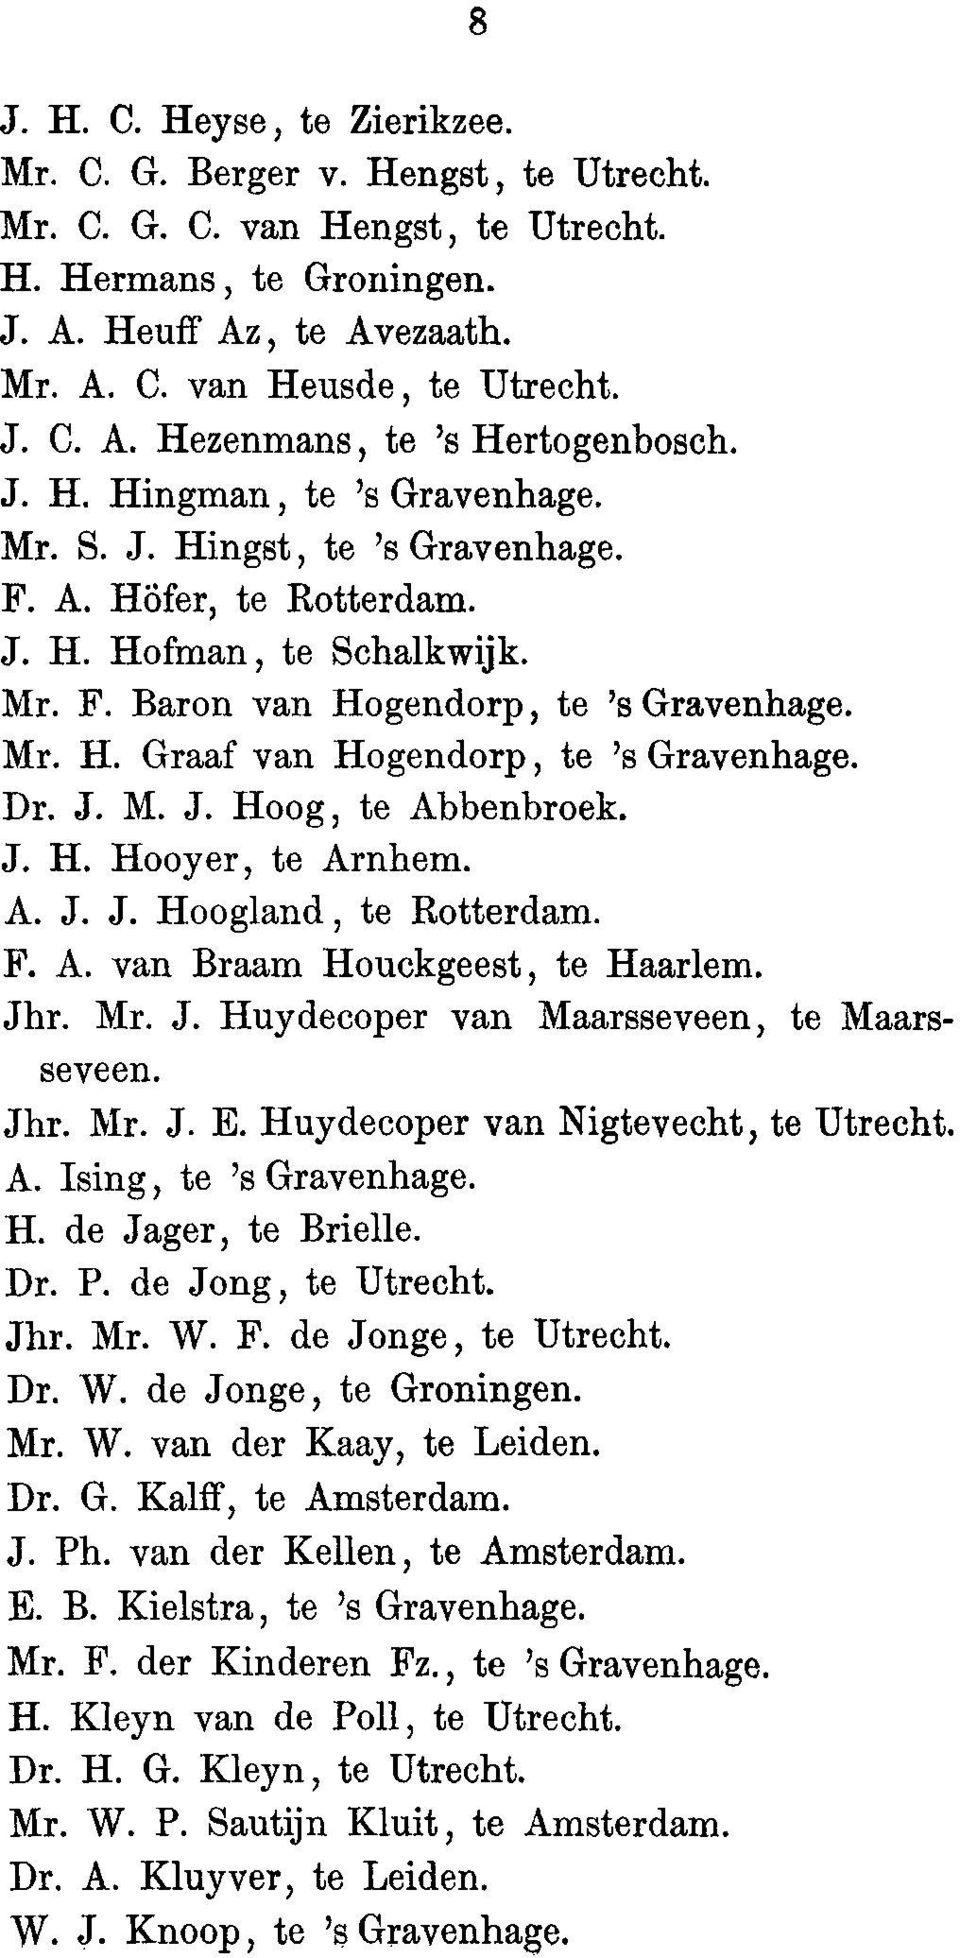 Dr. J. M. J. bog, to Abbenbroek. J. H. Hooyer, to Arnhem. A. J. J. Hoogland, to Rotterdam. F. A. van Braam Houckgeest, to Haarlem. Jhr. Mr. J. Huydecoper van Maarsseveen, to Maarsseveen. Jhr. Mr. J. E.